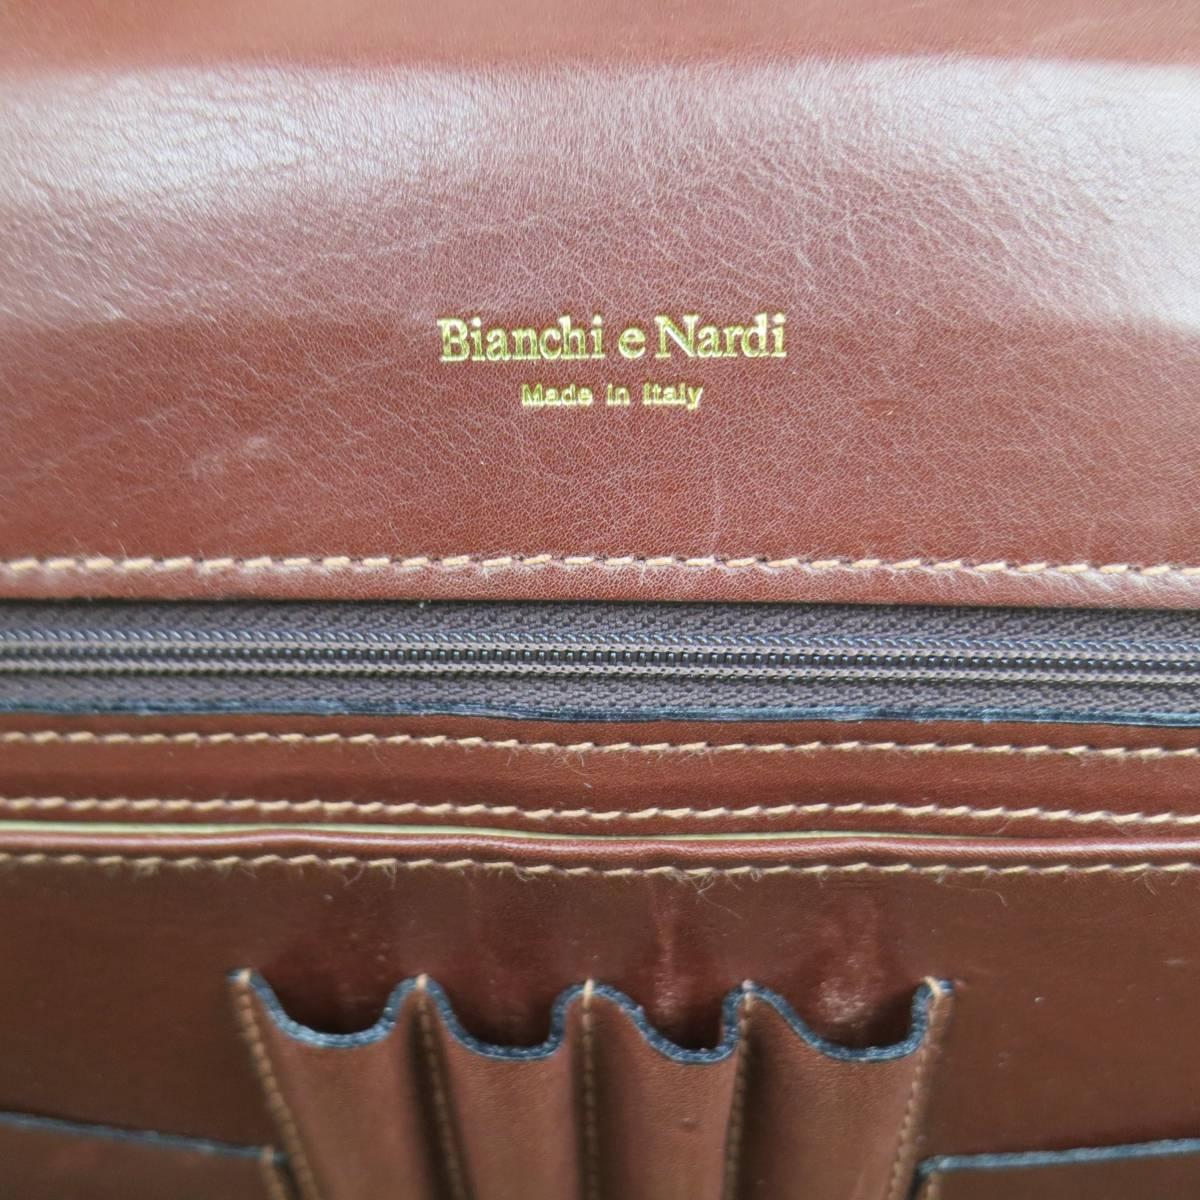 Men's BIANCHI e NARDI Cherry Brown & Gold Leather Briefcase Bag Portfolio 3